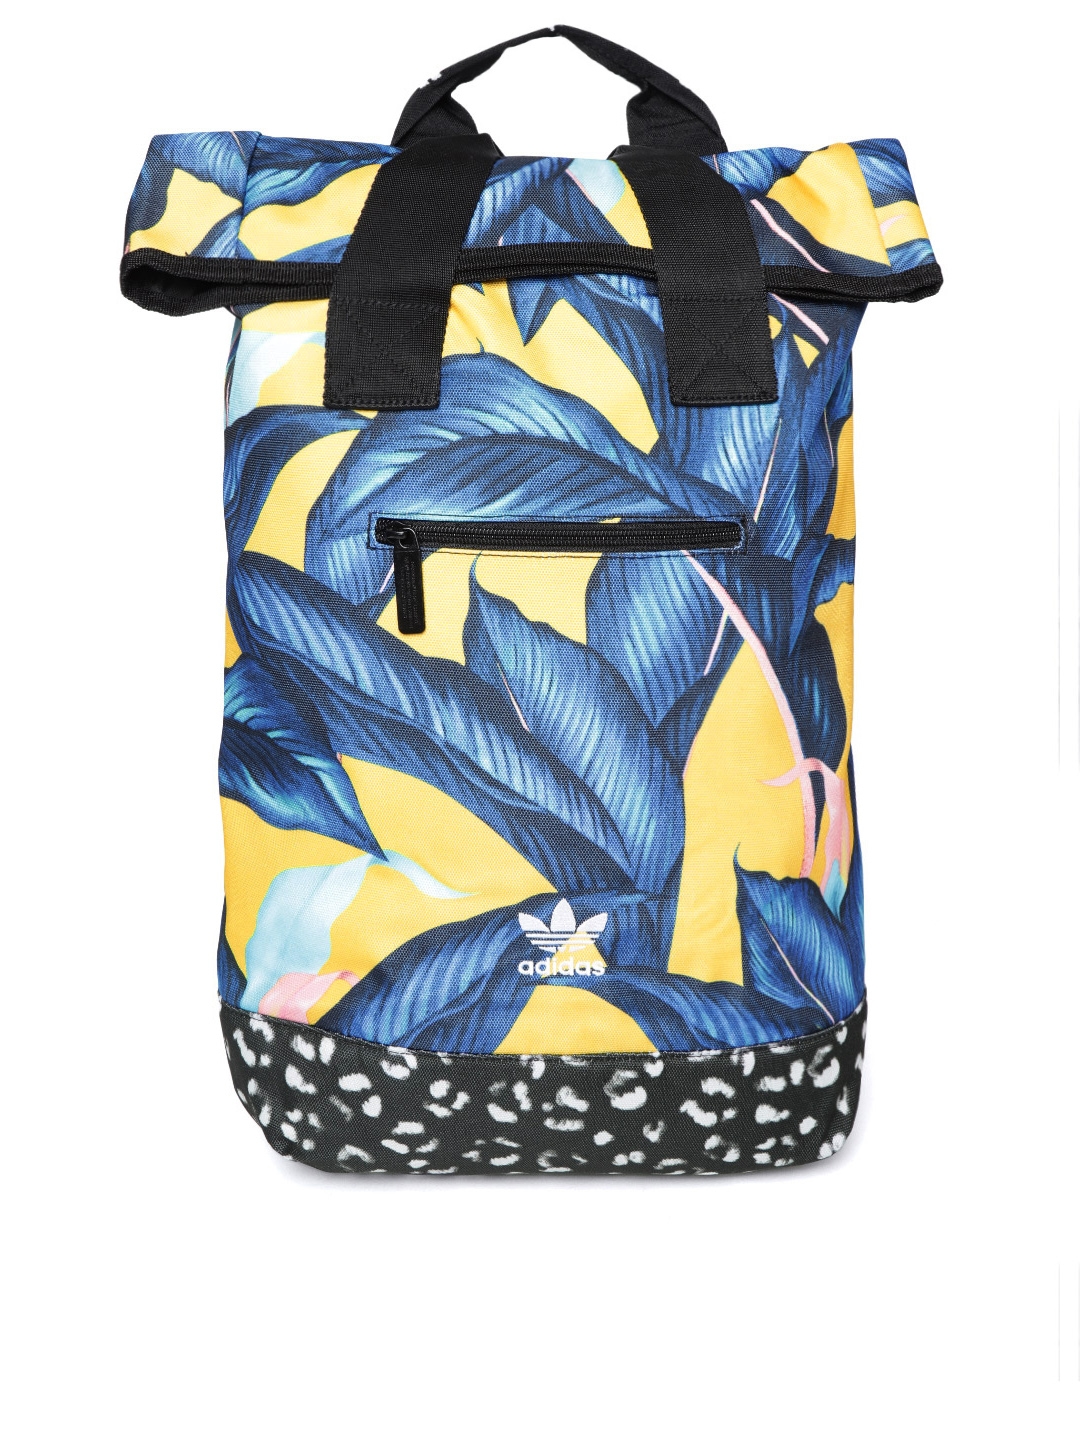 ADIDAS Originals Women Blue & Yellow TOP M B FARM Printed Laptop Backpack Backpacks for Women | Myntra